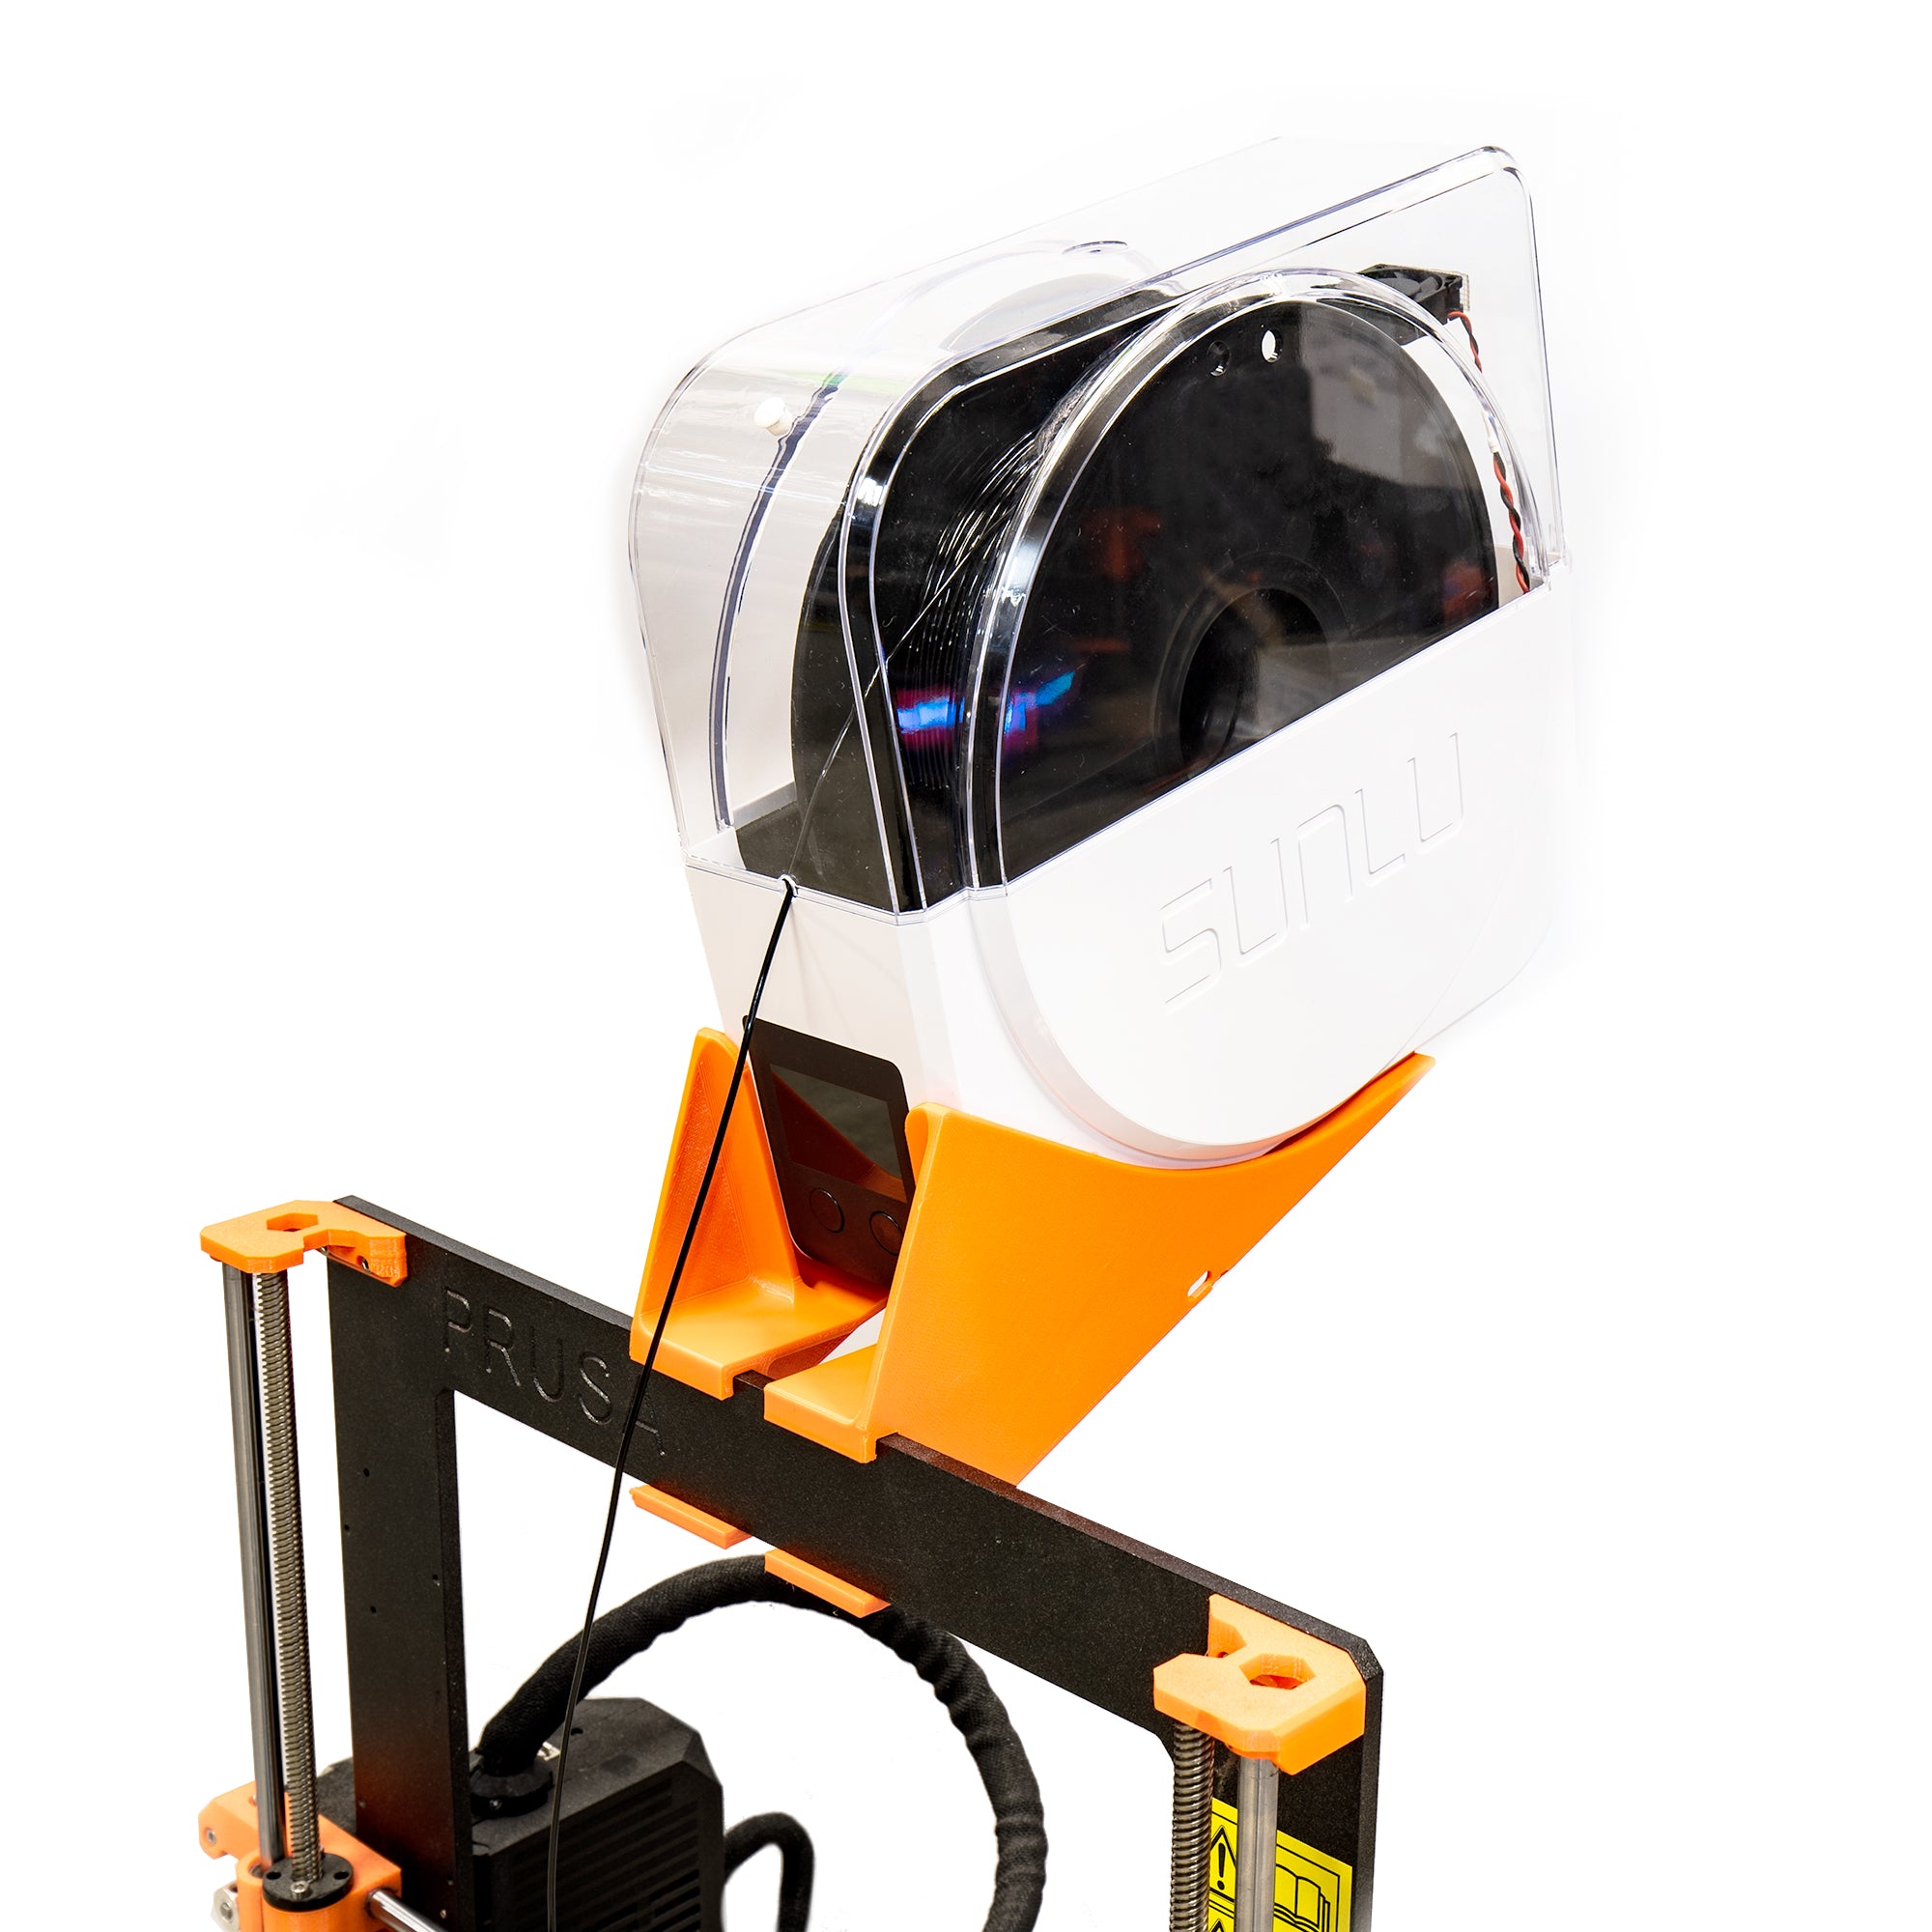 SUNLU 3D Filament Vacuum Bags - SUNLU Official Online Store